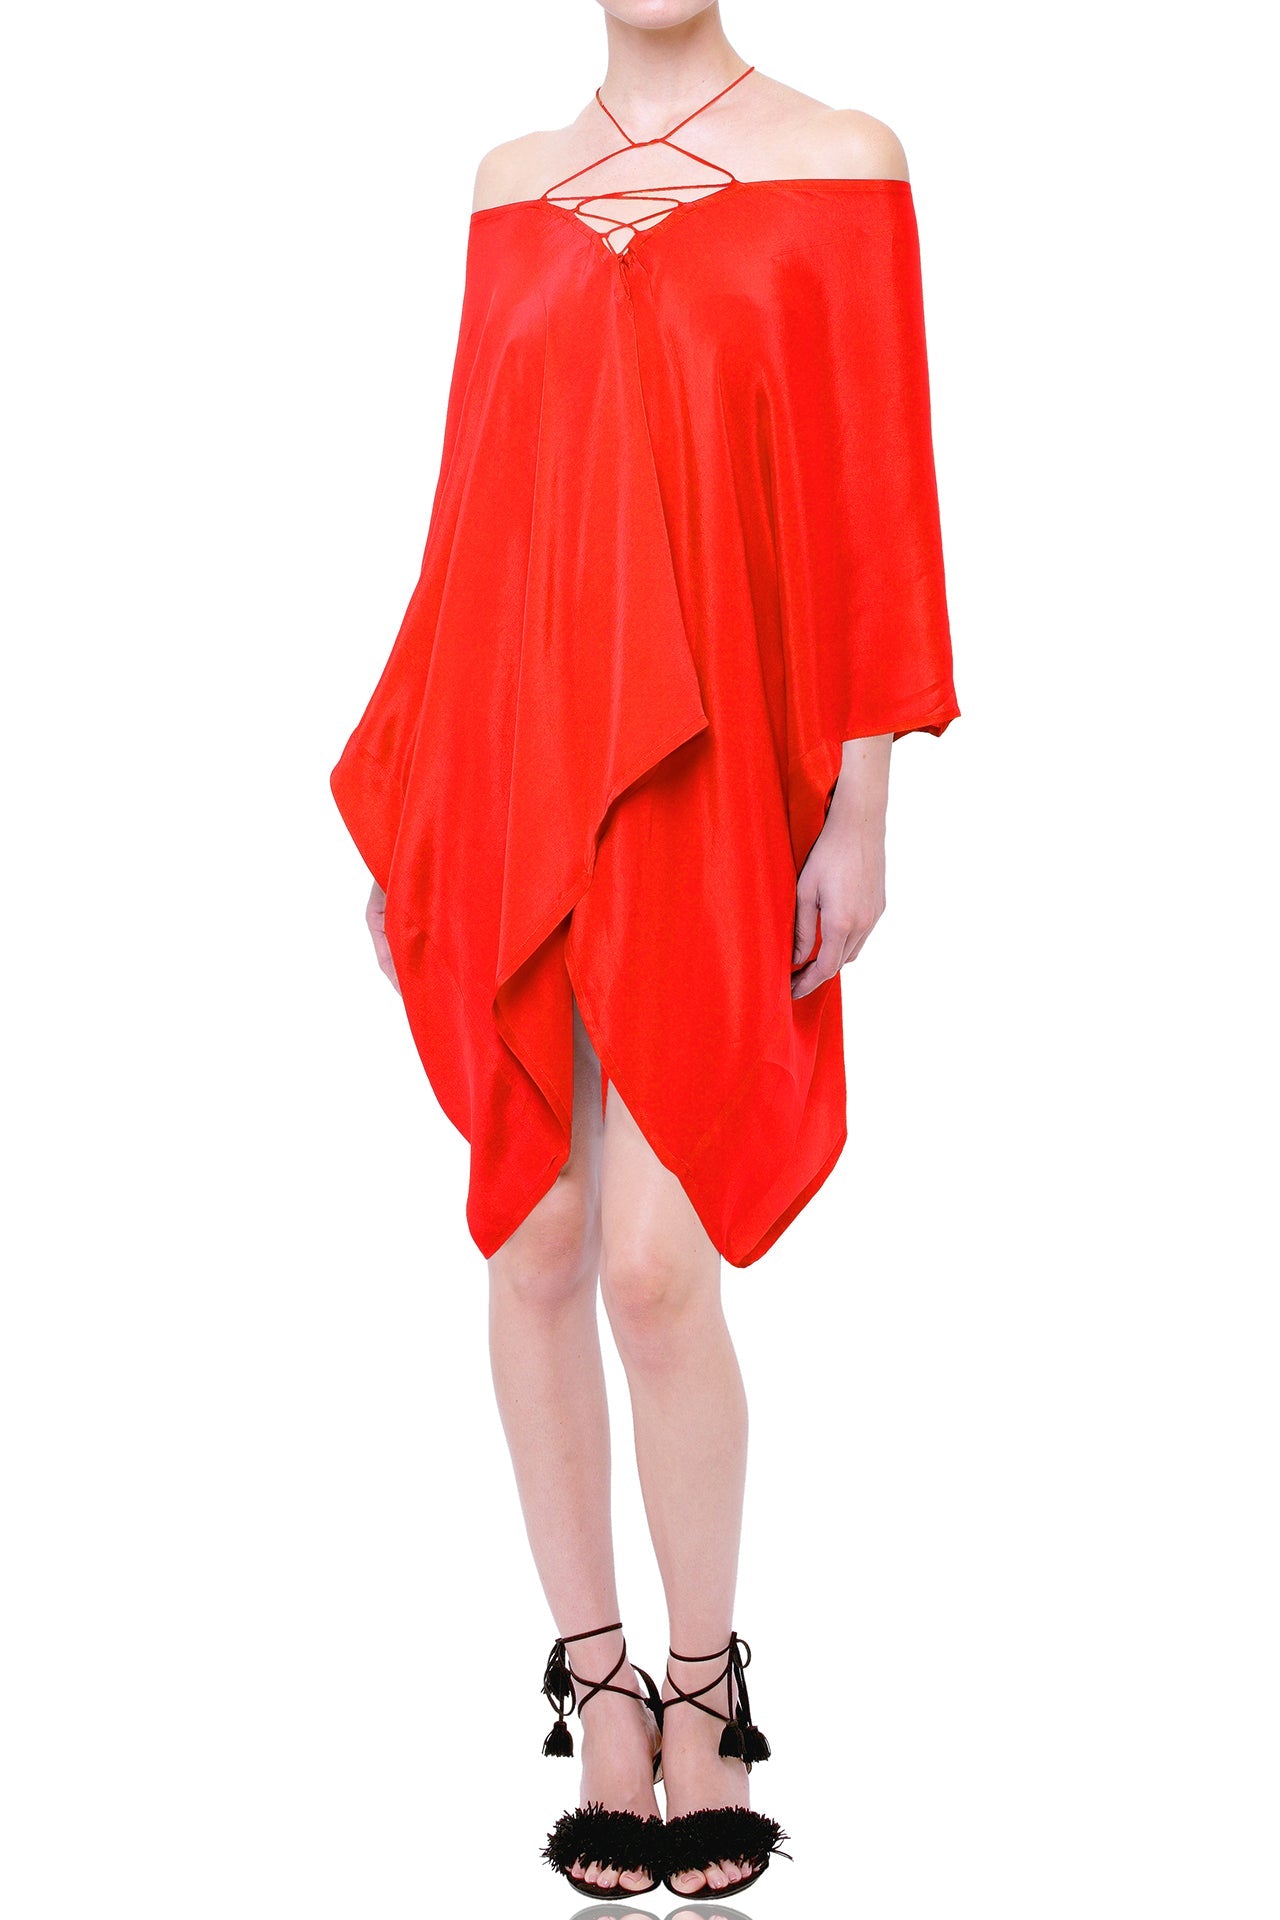 Red short Lace up Kaftan dress